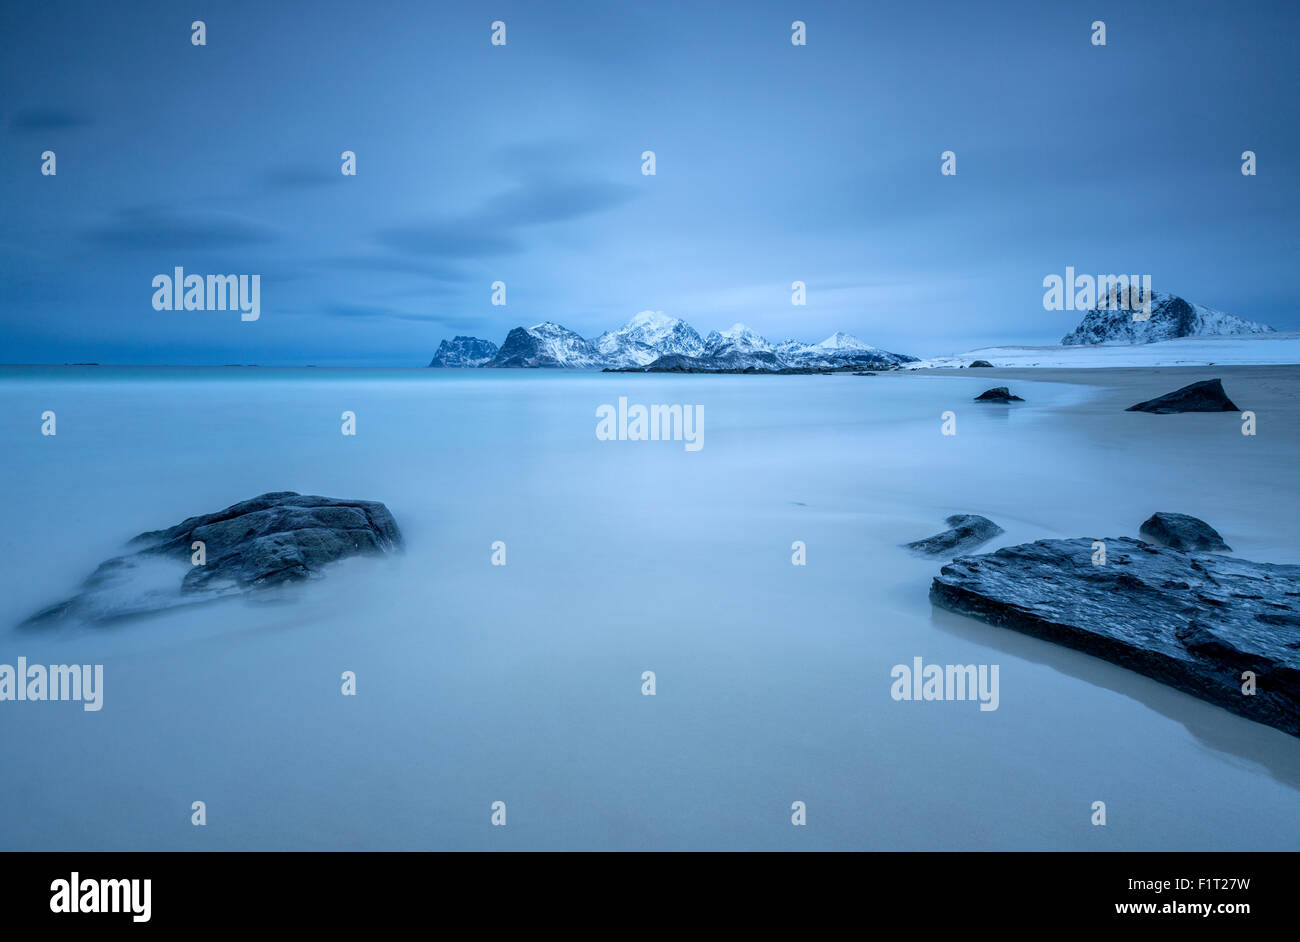 The cold blue sea bathes the beach still partially snowy. Myrland, Lofoten Islands, Northern Norway, Scandinavia, Arctic, Europe Stock Photo